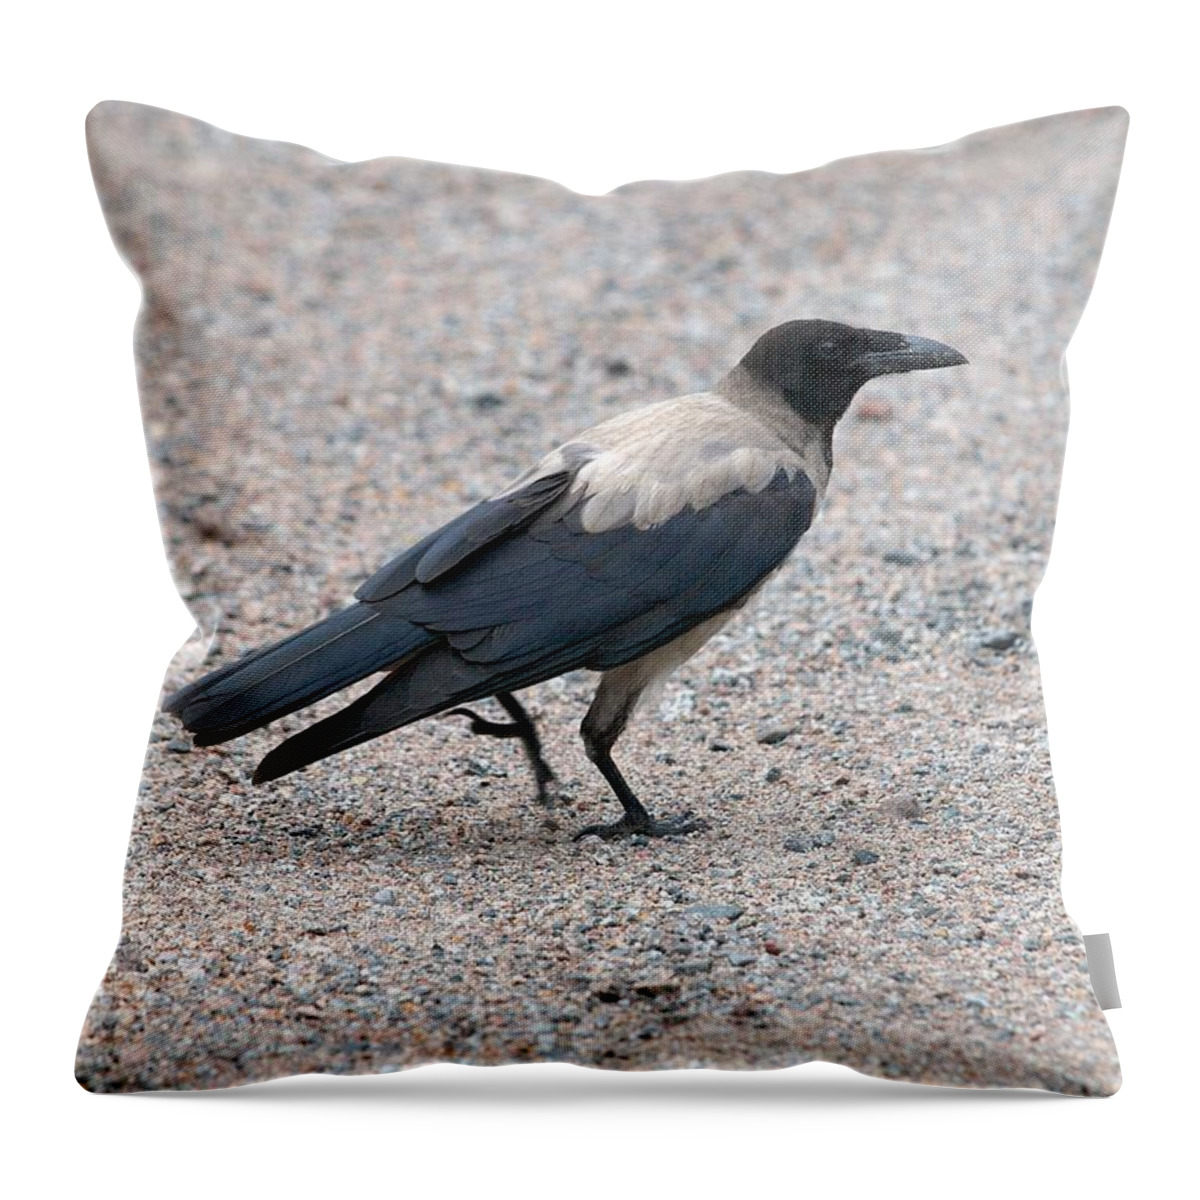 Lehtokukka Throw Pillow featuring the photograph Hooded Crow by Jouko Lehto